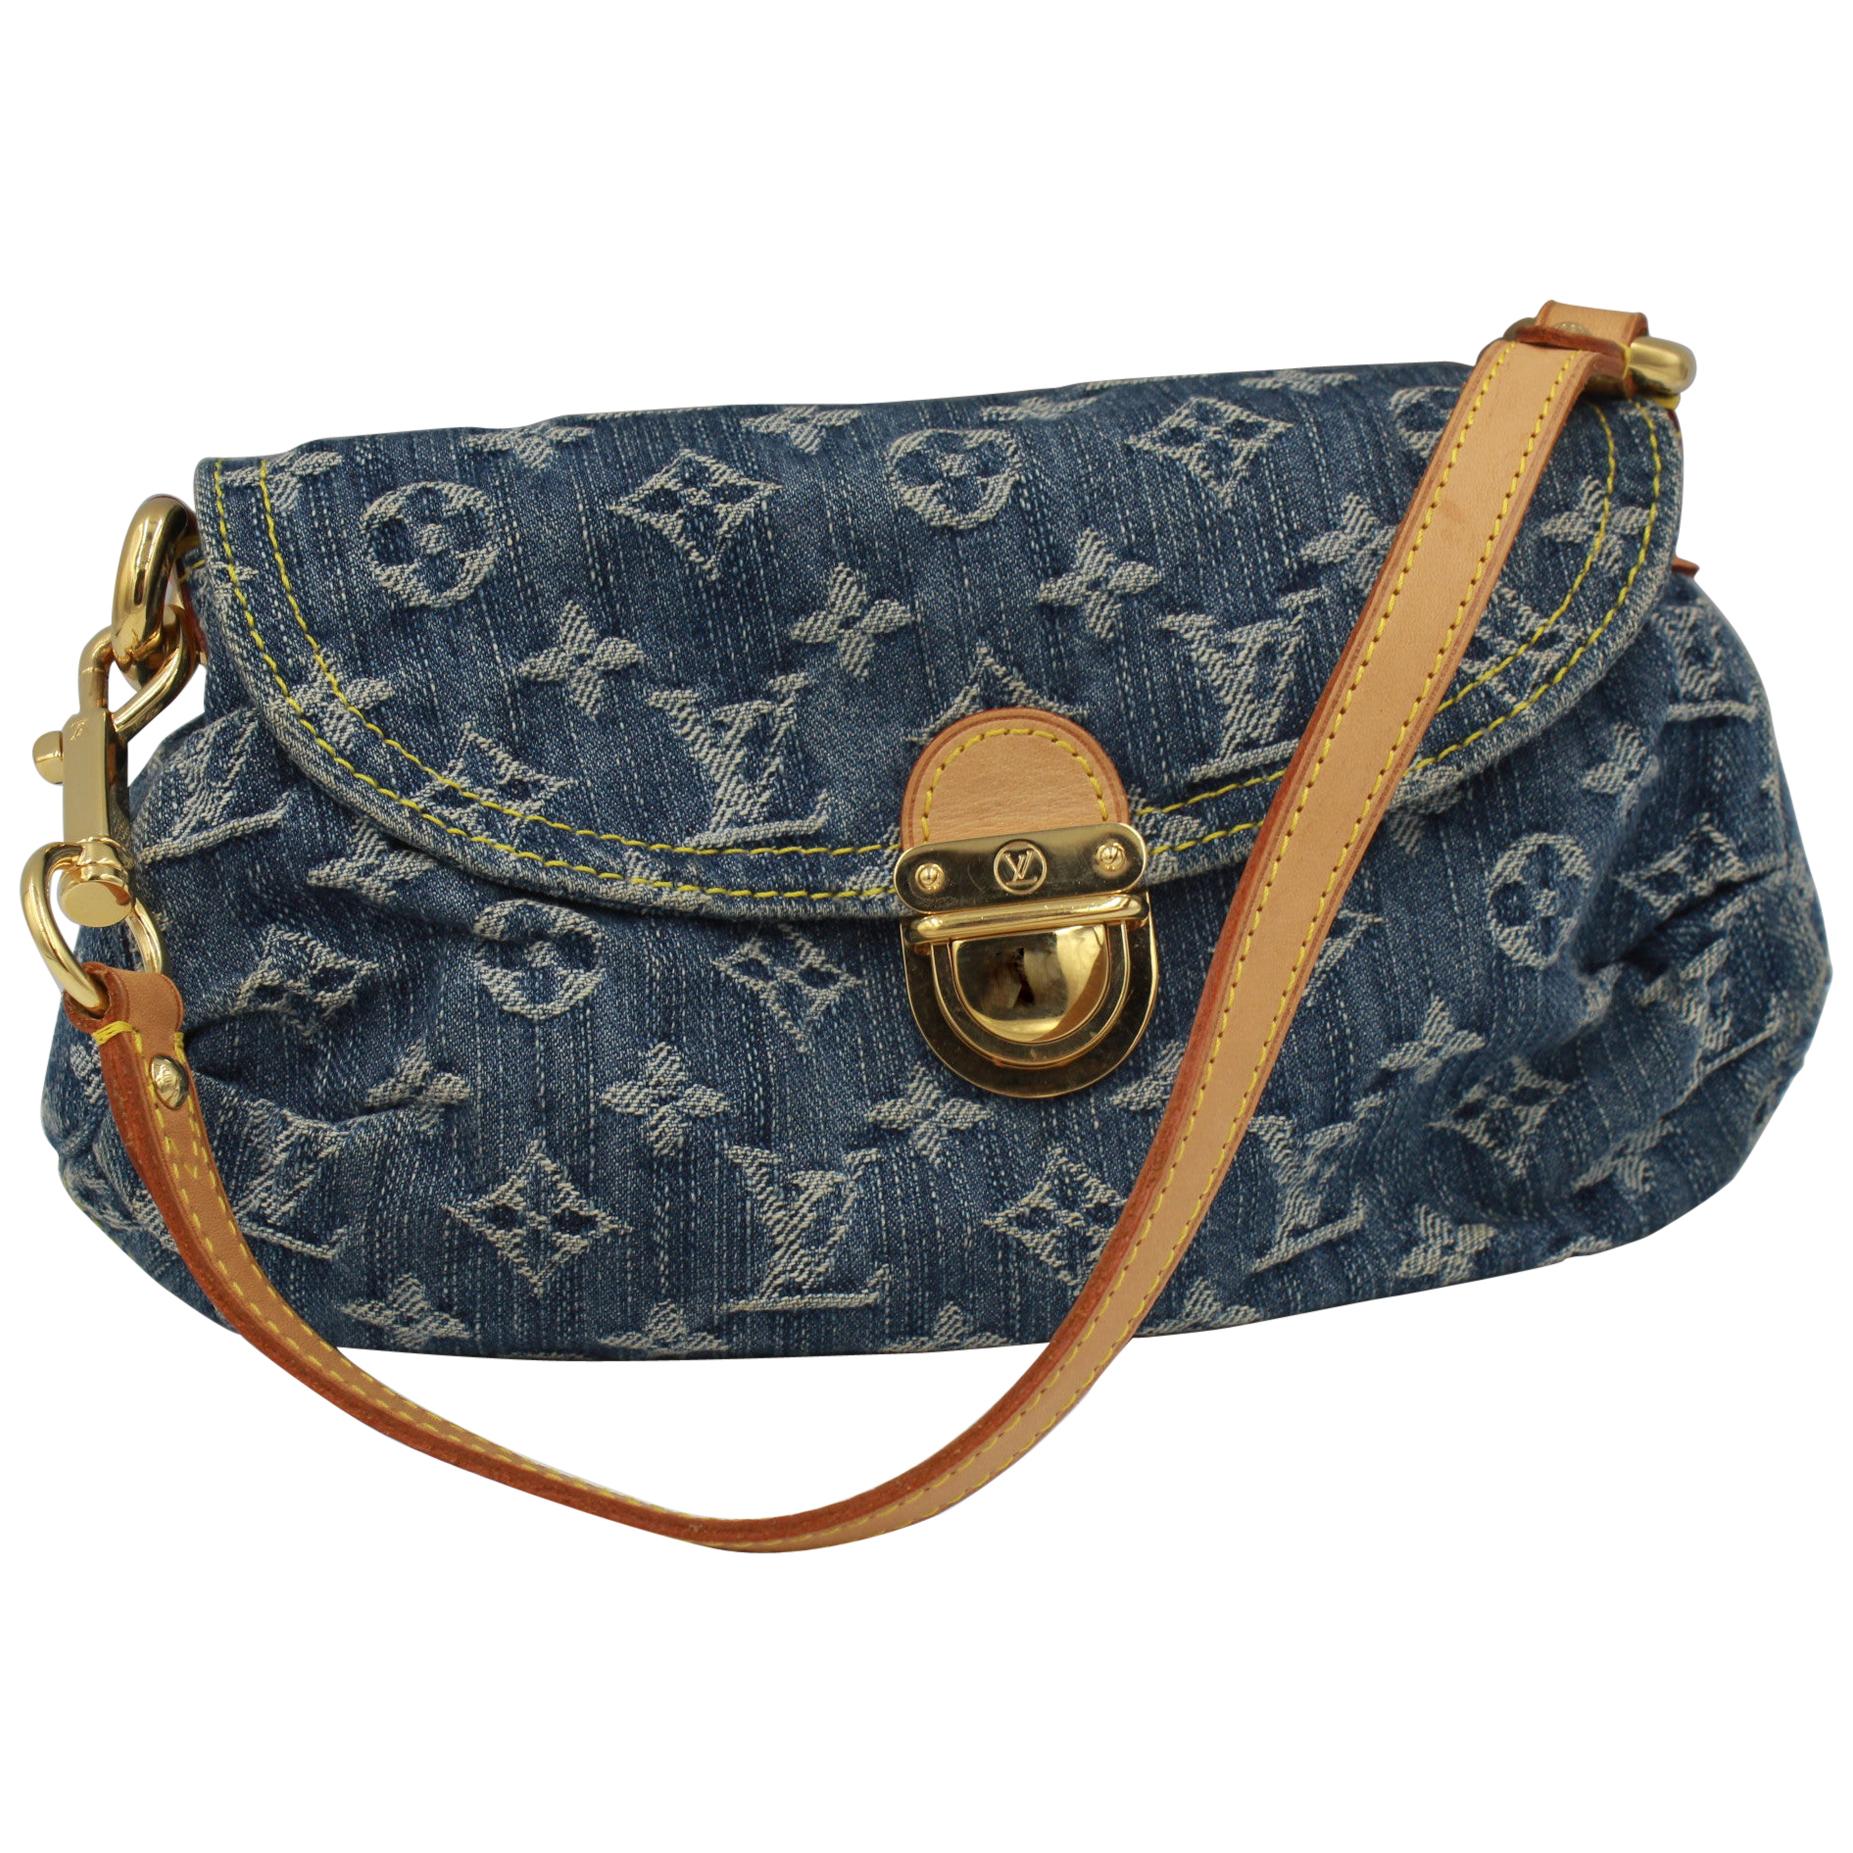 Louis Vuitton handbag in denim monogram